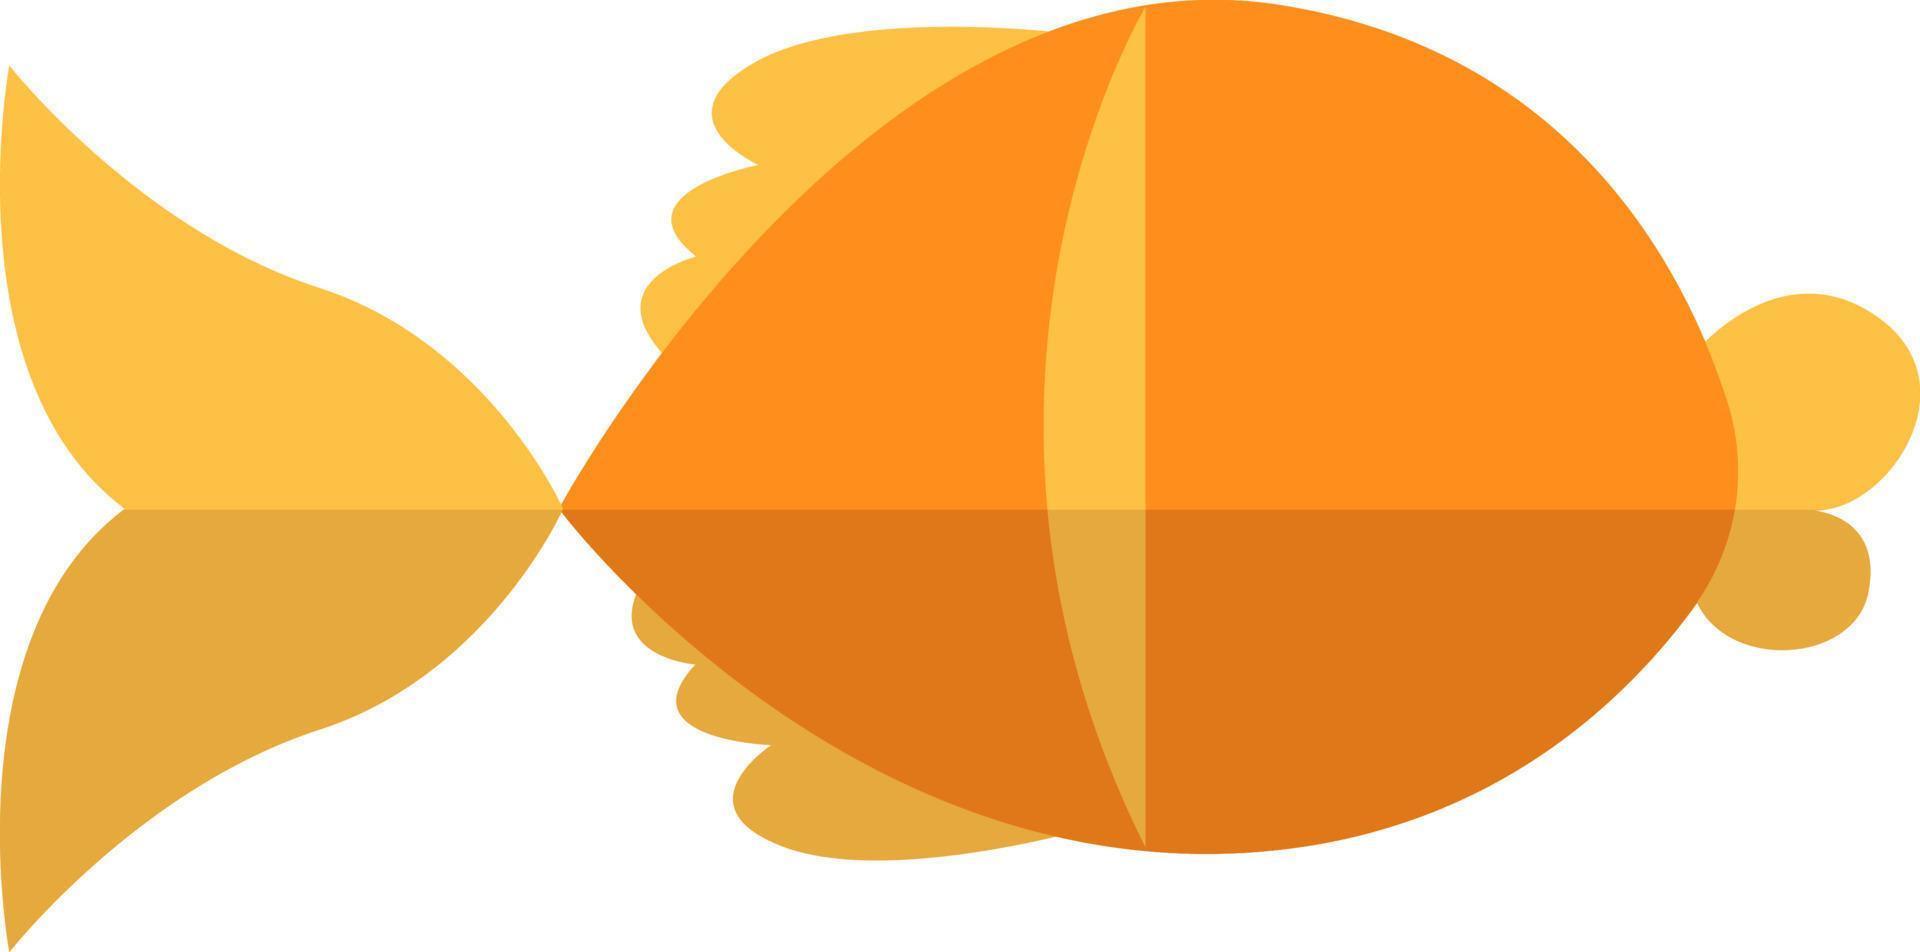 Fat orange fish, illustration, vector on white background.